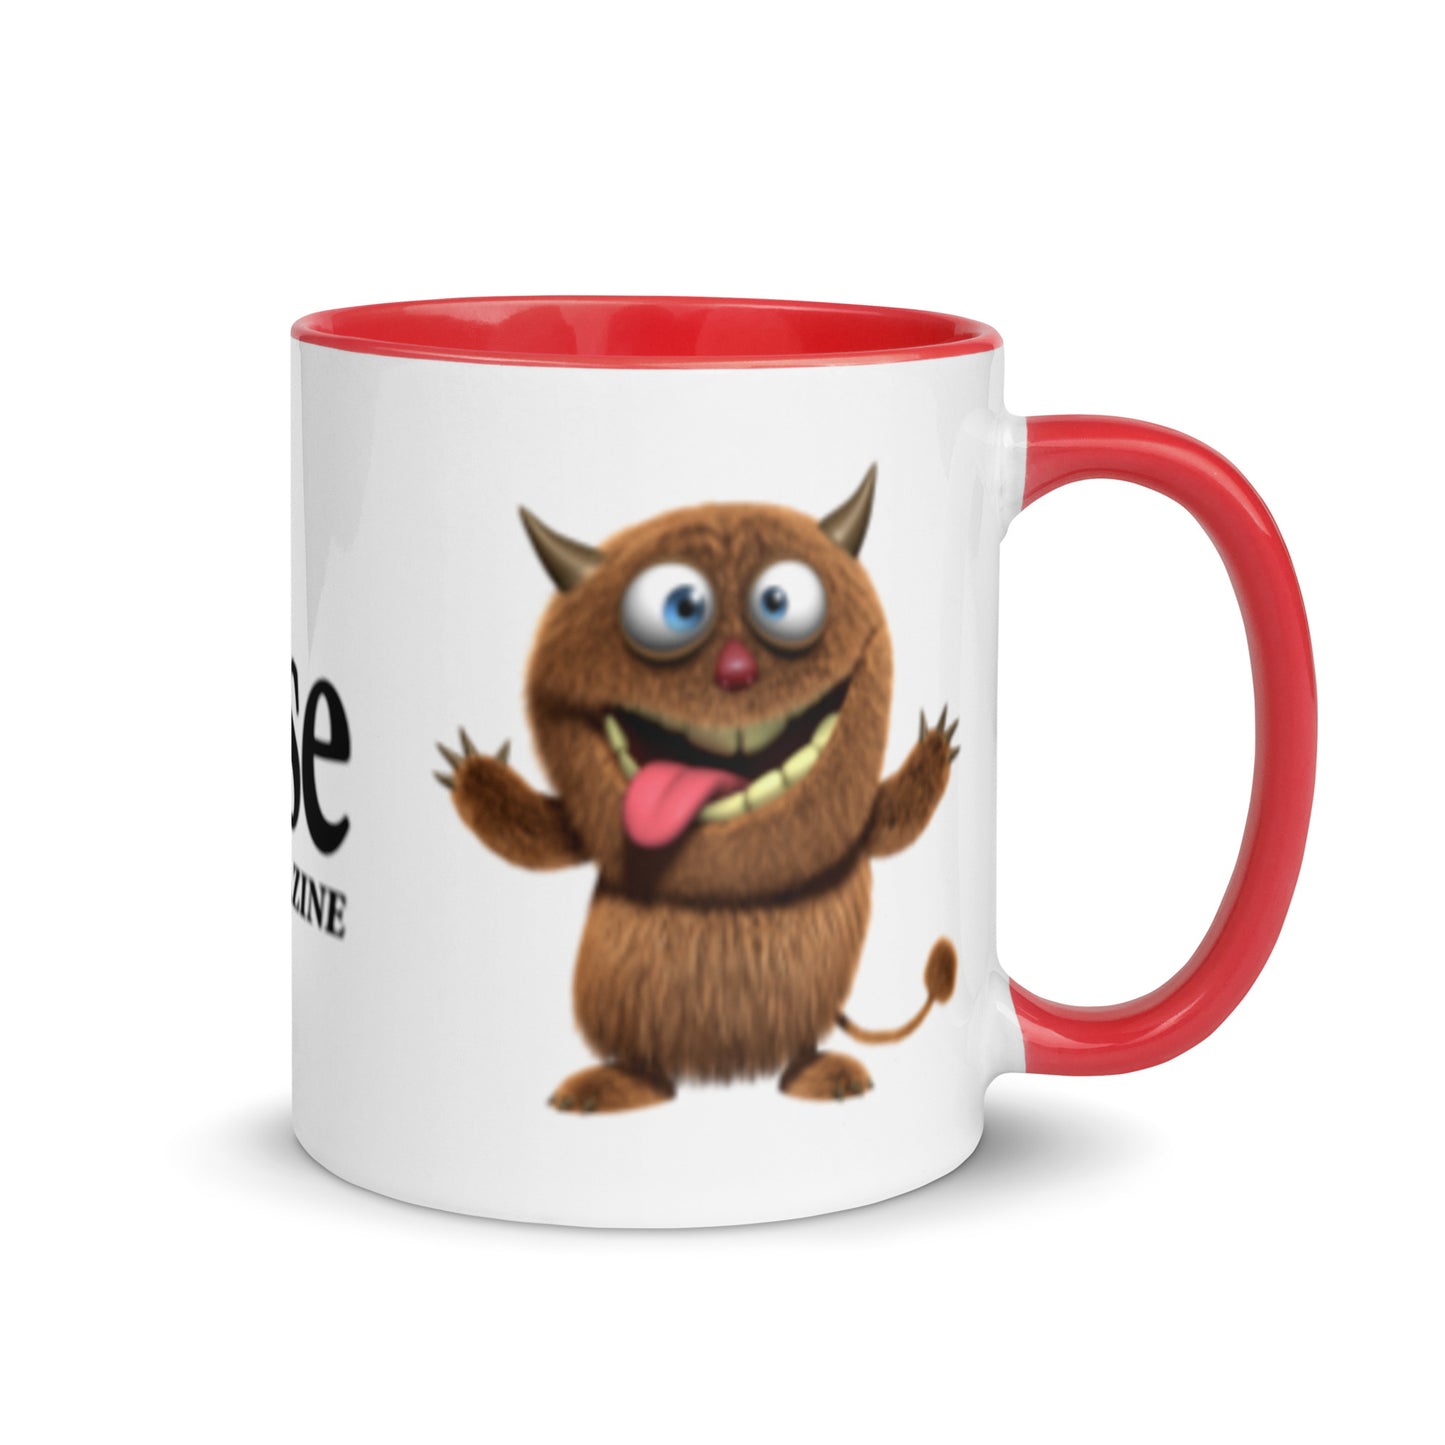 Bright & Goofy THUMPER & PULPHOUSE LOGO MUG with COLOR INSIDE - Coffee Tea Mug Fun & Humorous